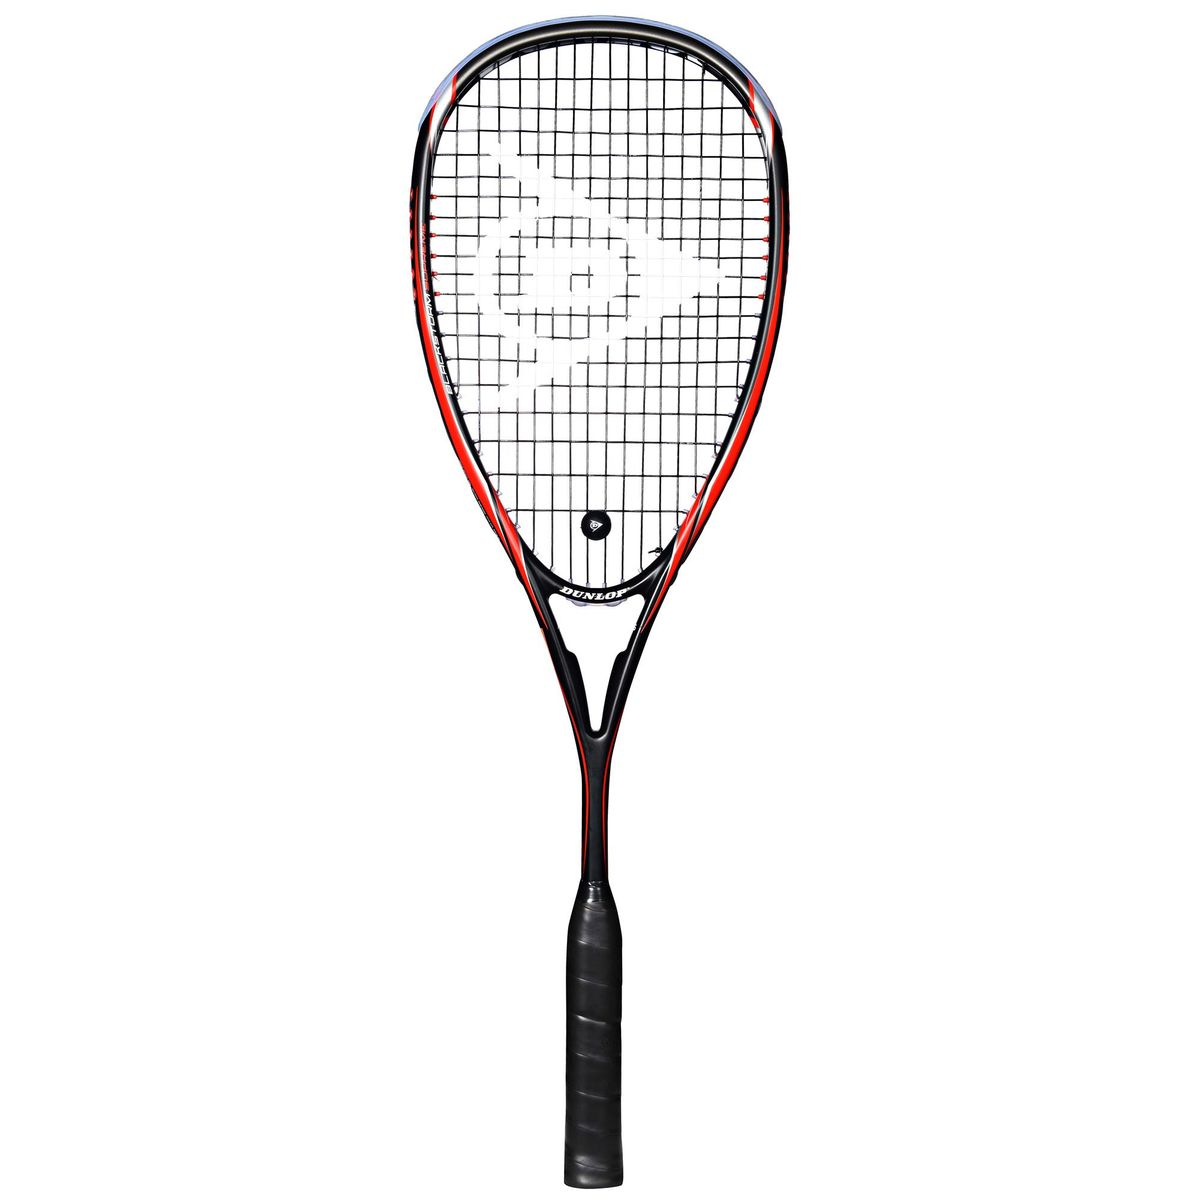 Dunlop Blackstorm Supreme Squash Racket